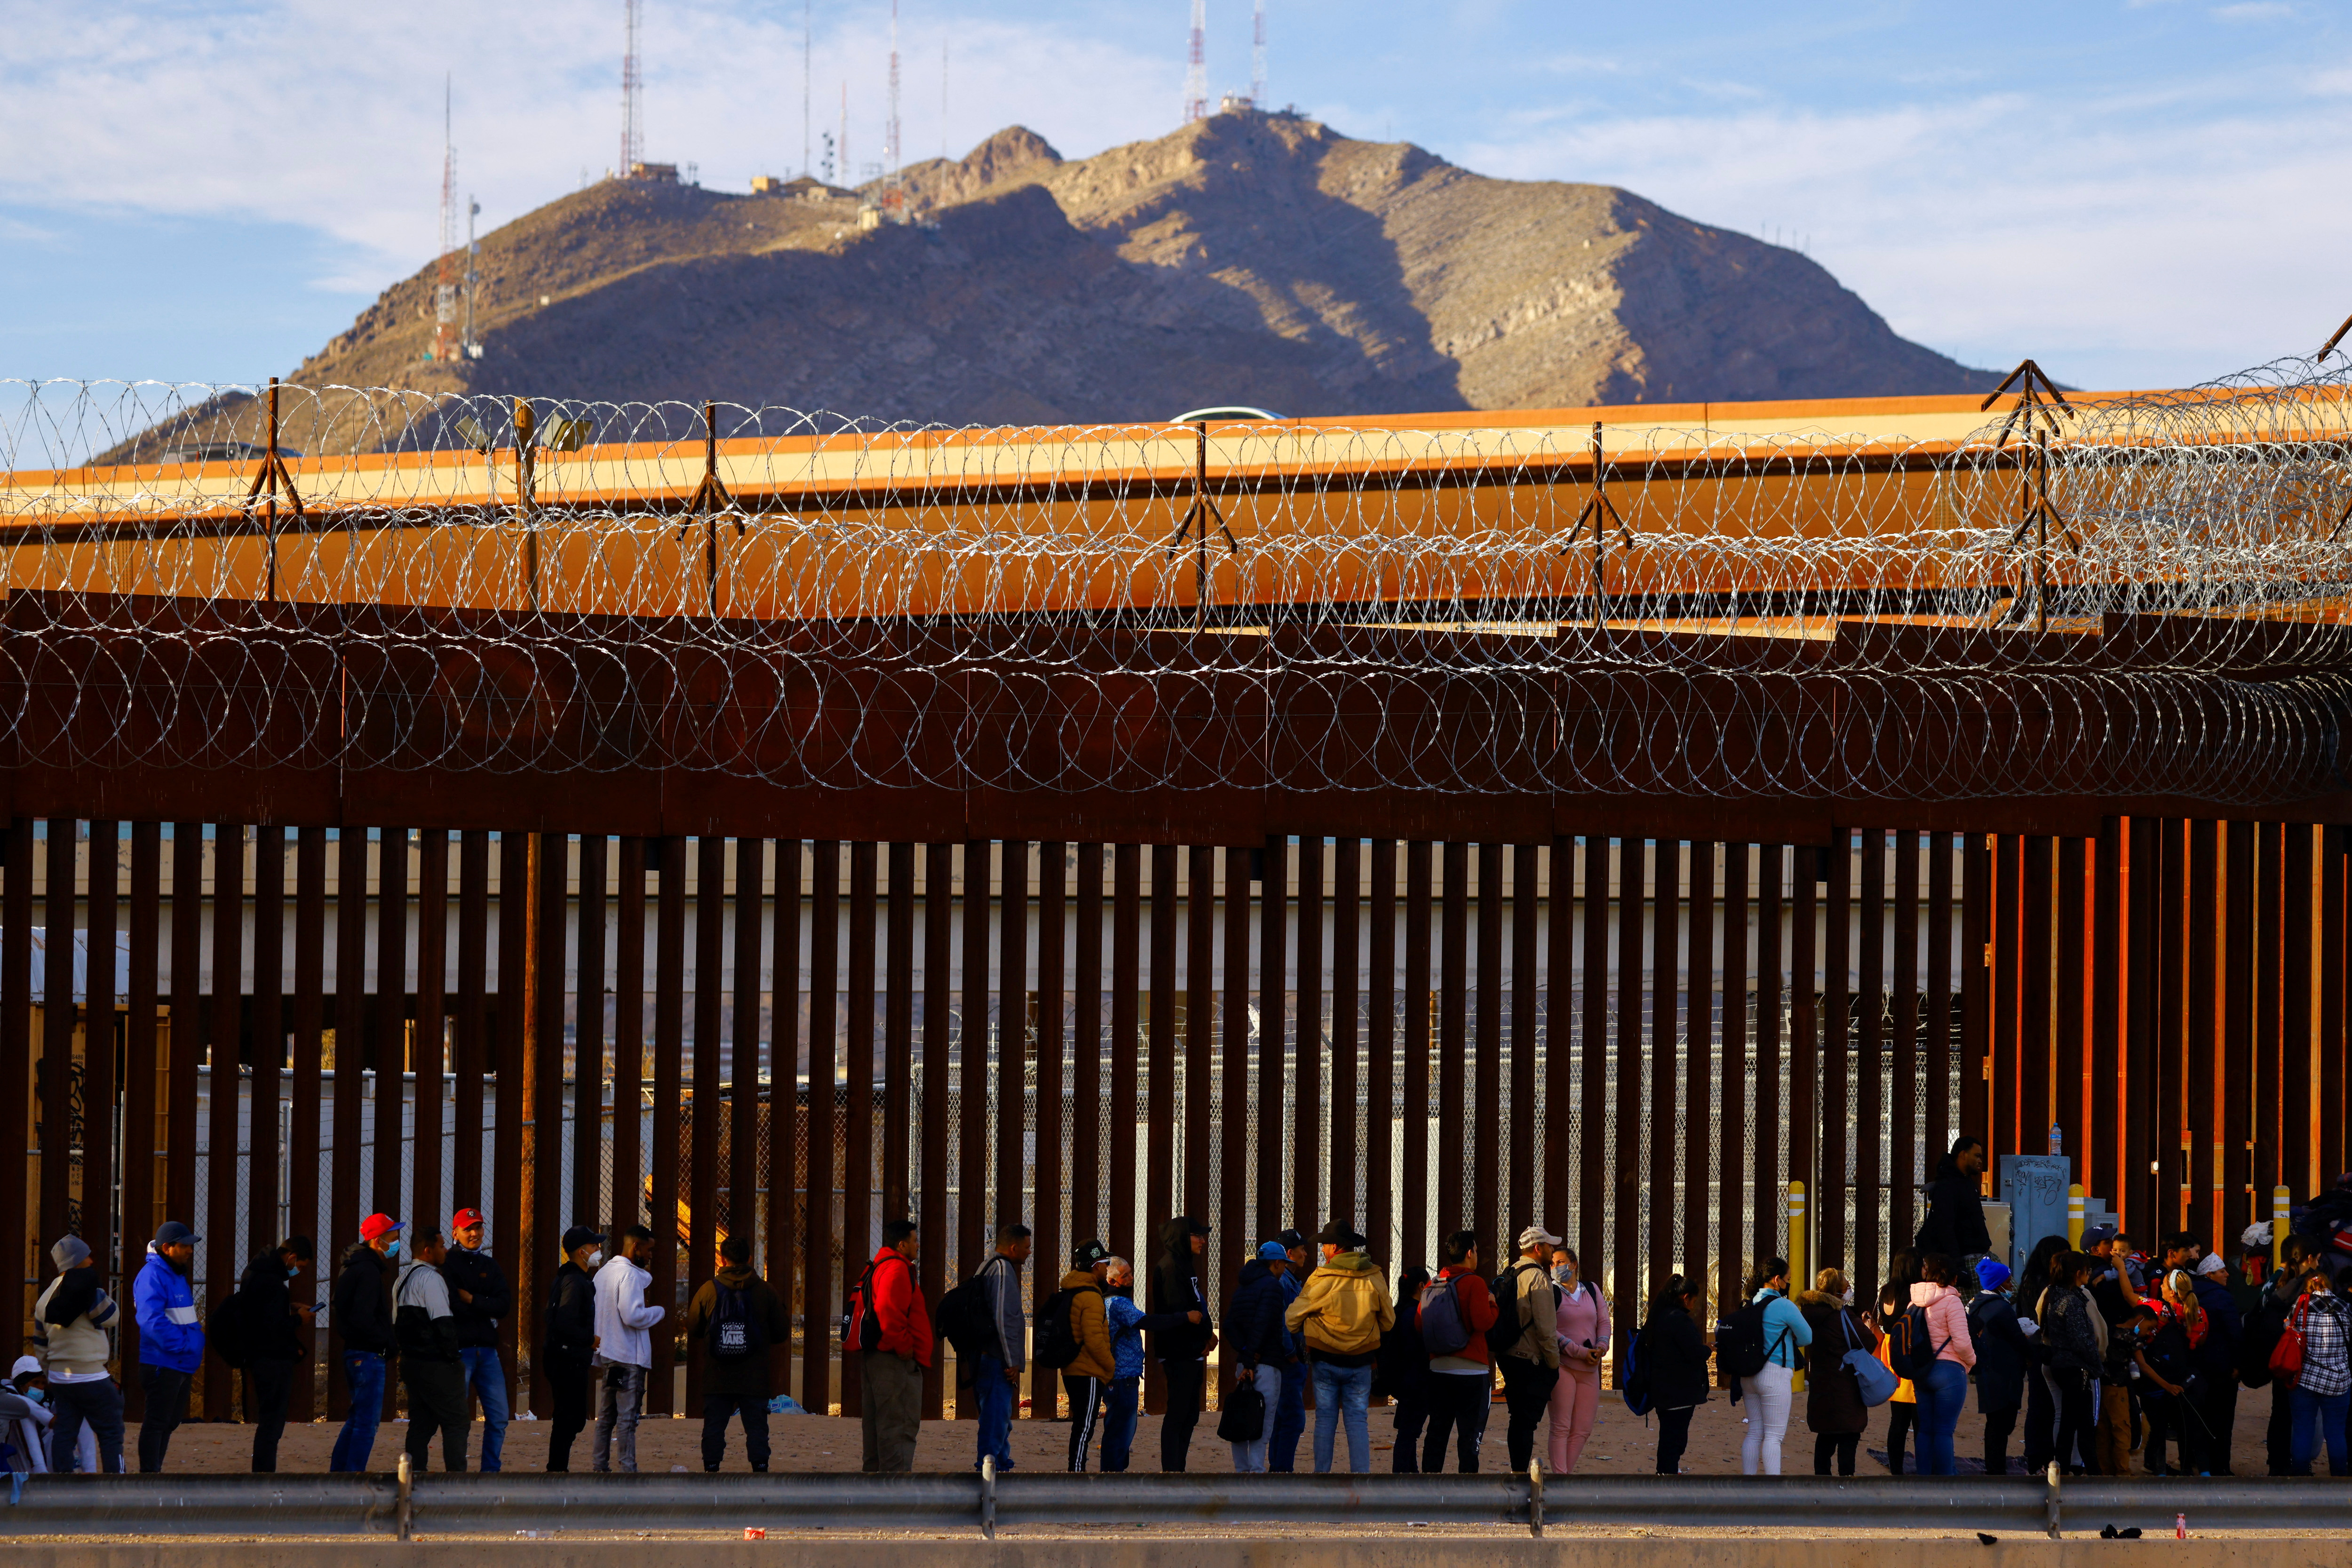 Migrants queue near the border fence, after crossing the Rio Bravo river, to request asylum in El Paso